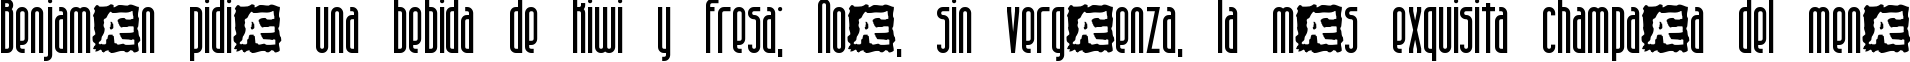 Пример написания шрифтом Overhead BRK текста на испанском